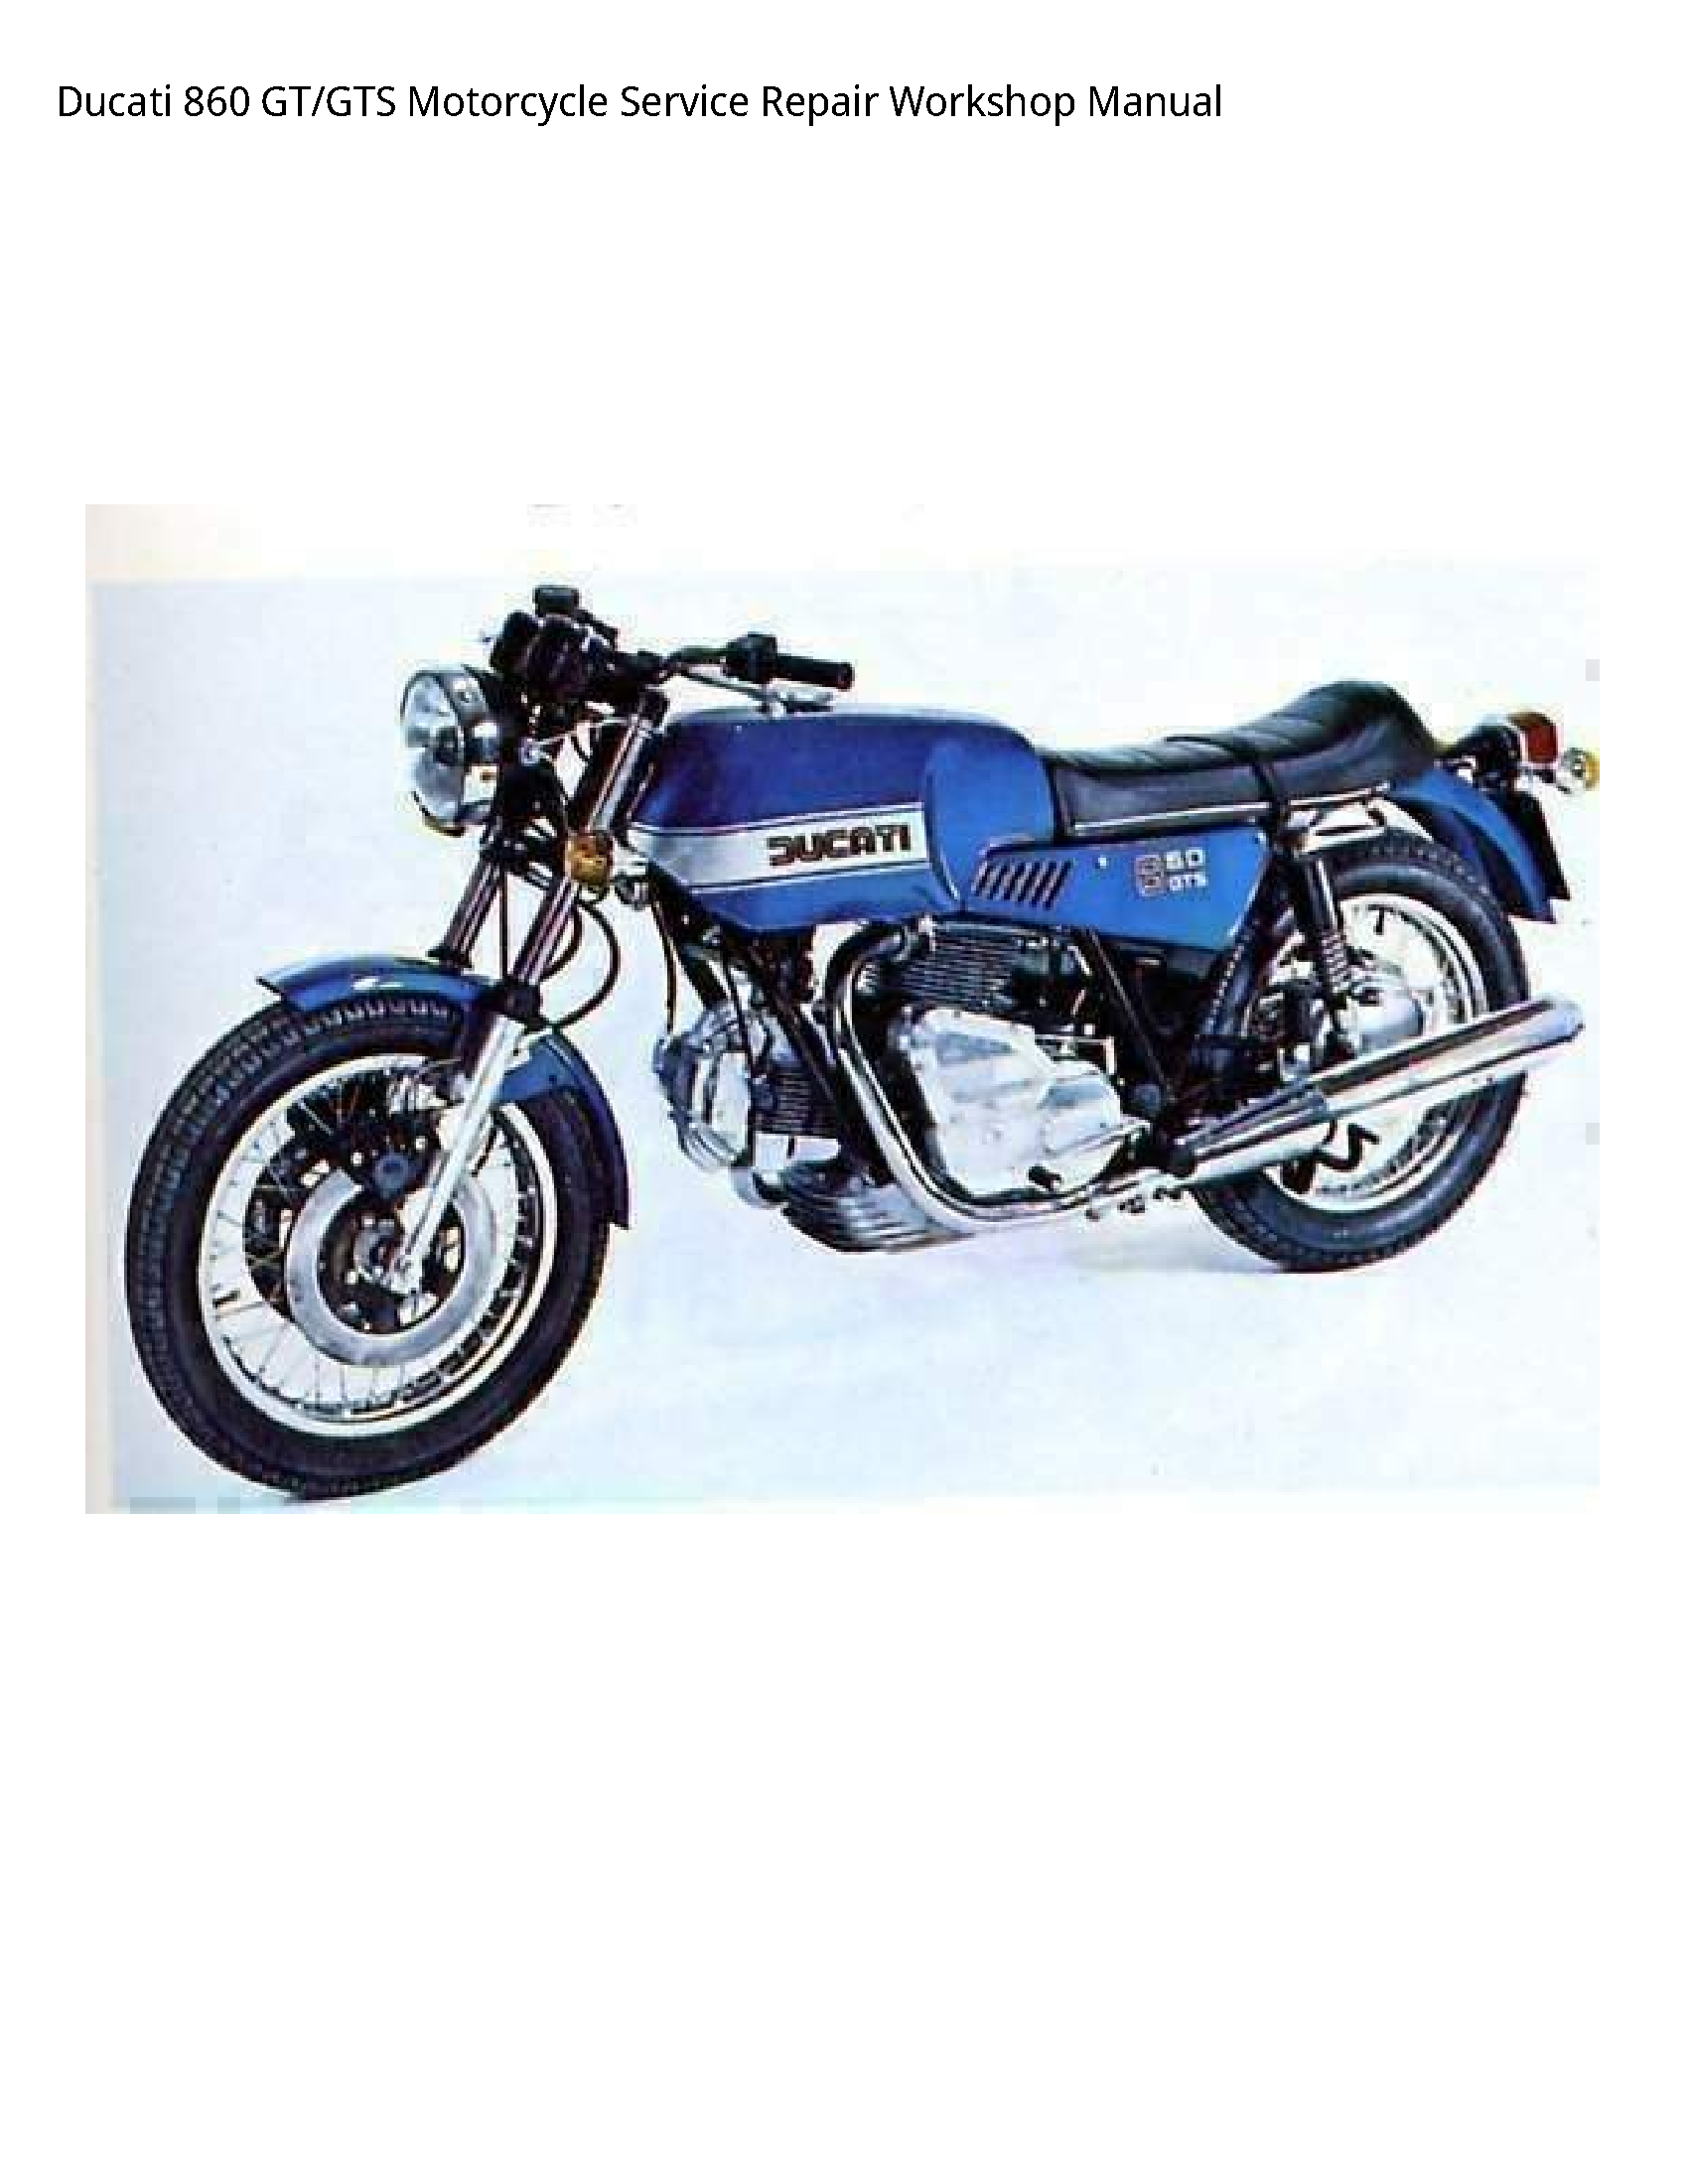 Ducati 860 GT/GTS Motorcycle manual